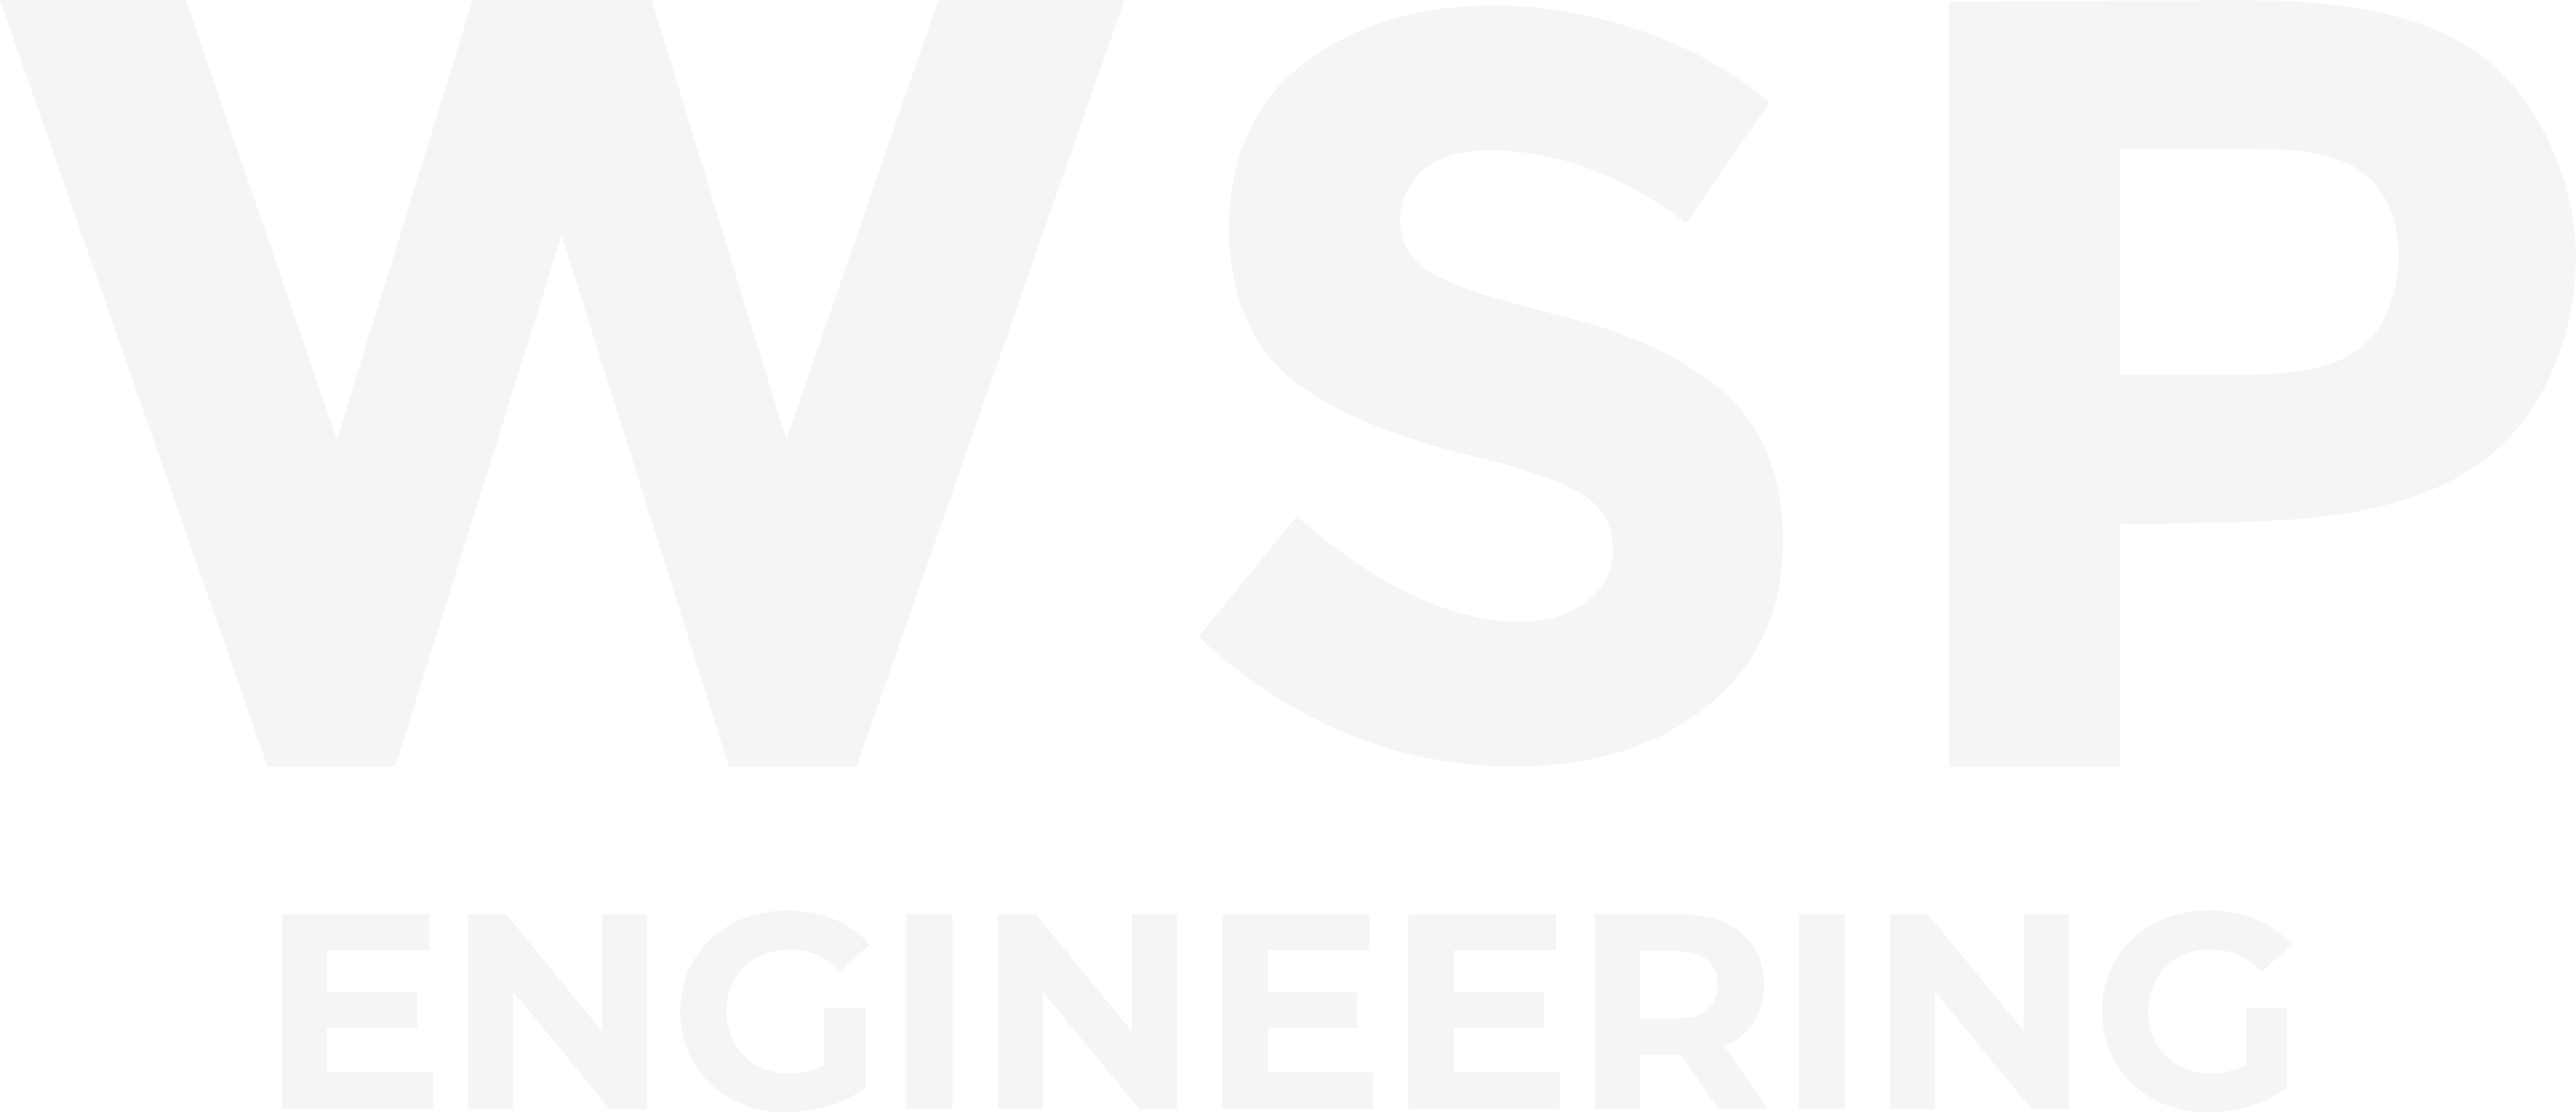 WSP Engineering Logo